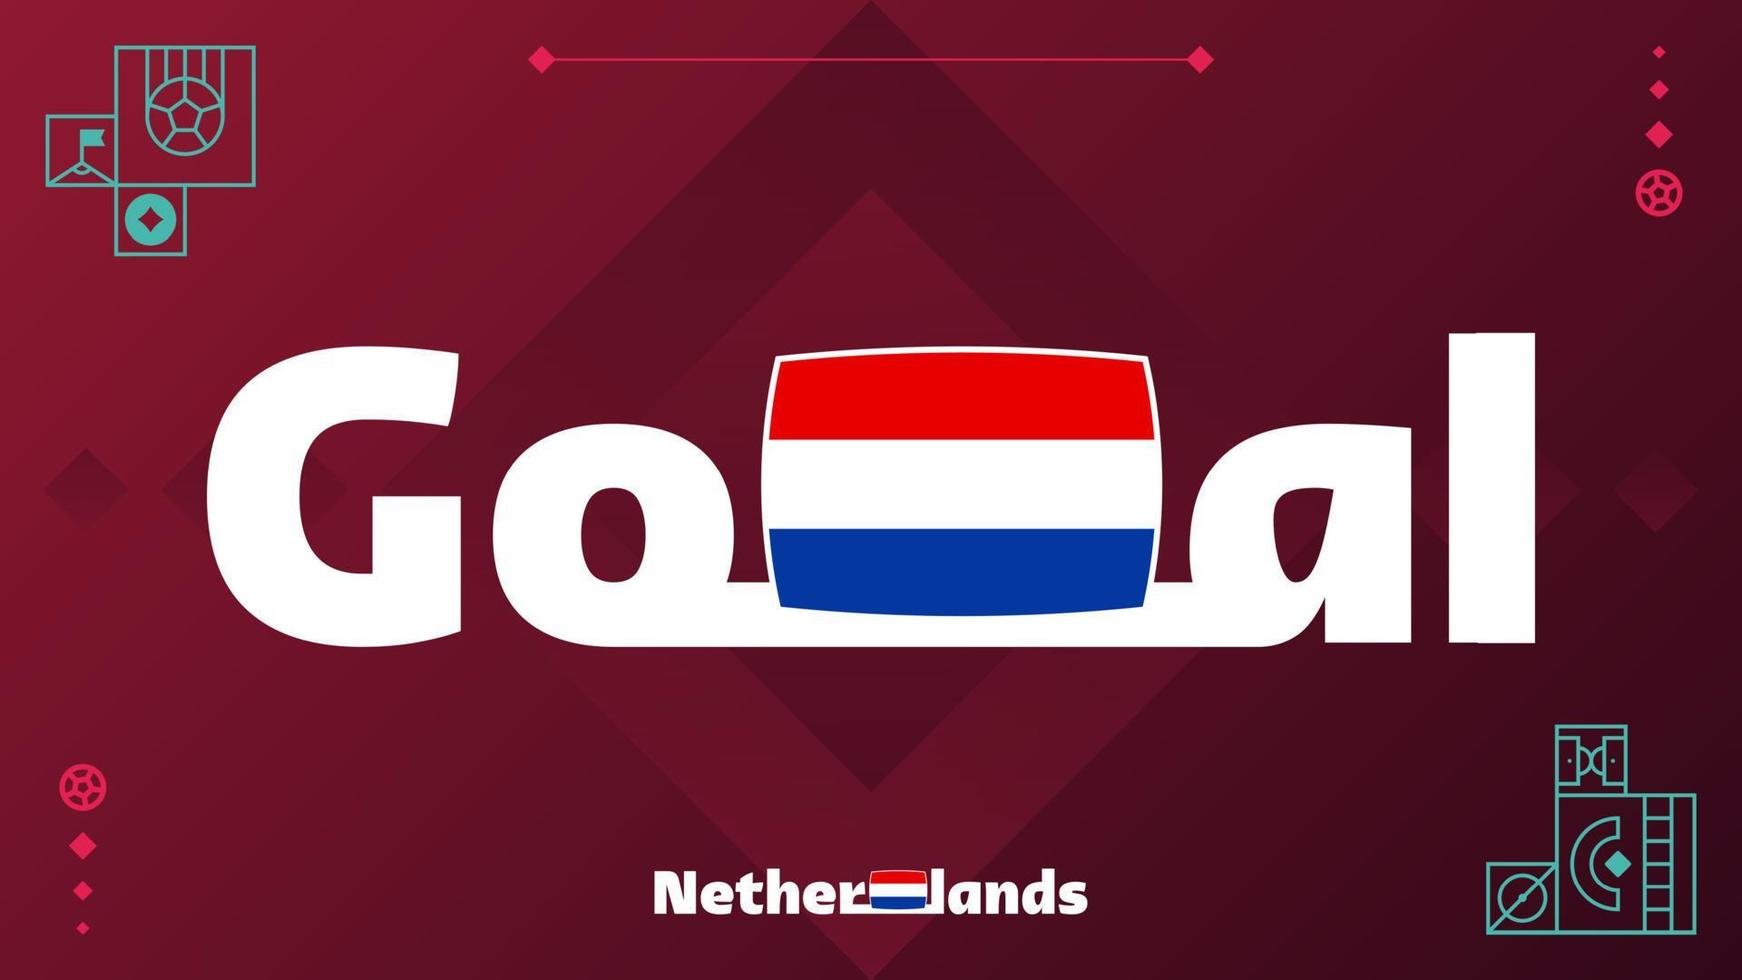 netherlands flag with goal slogan on tournament background. World football 2022 Vector illustration